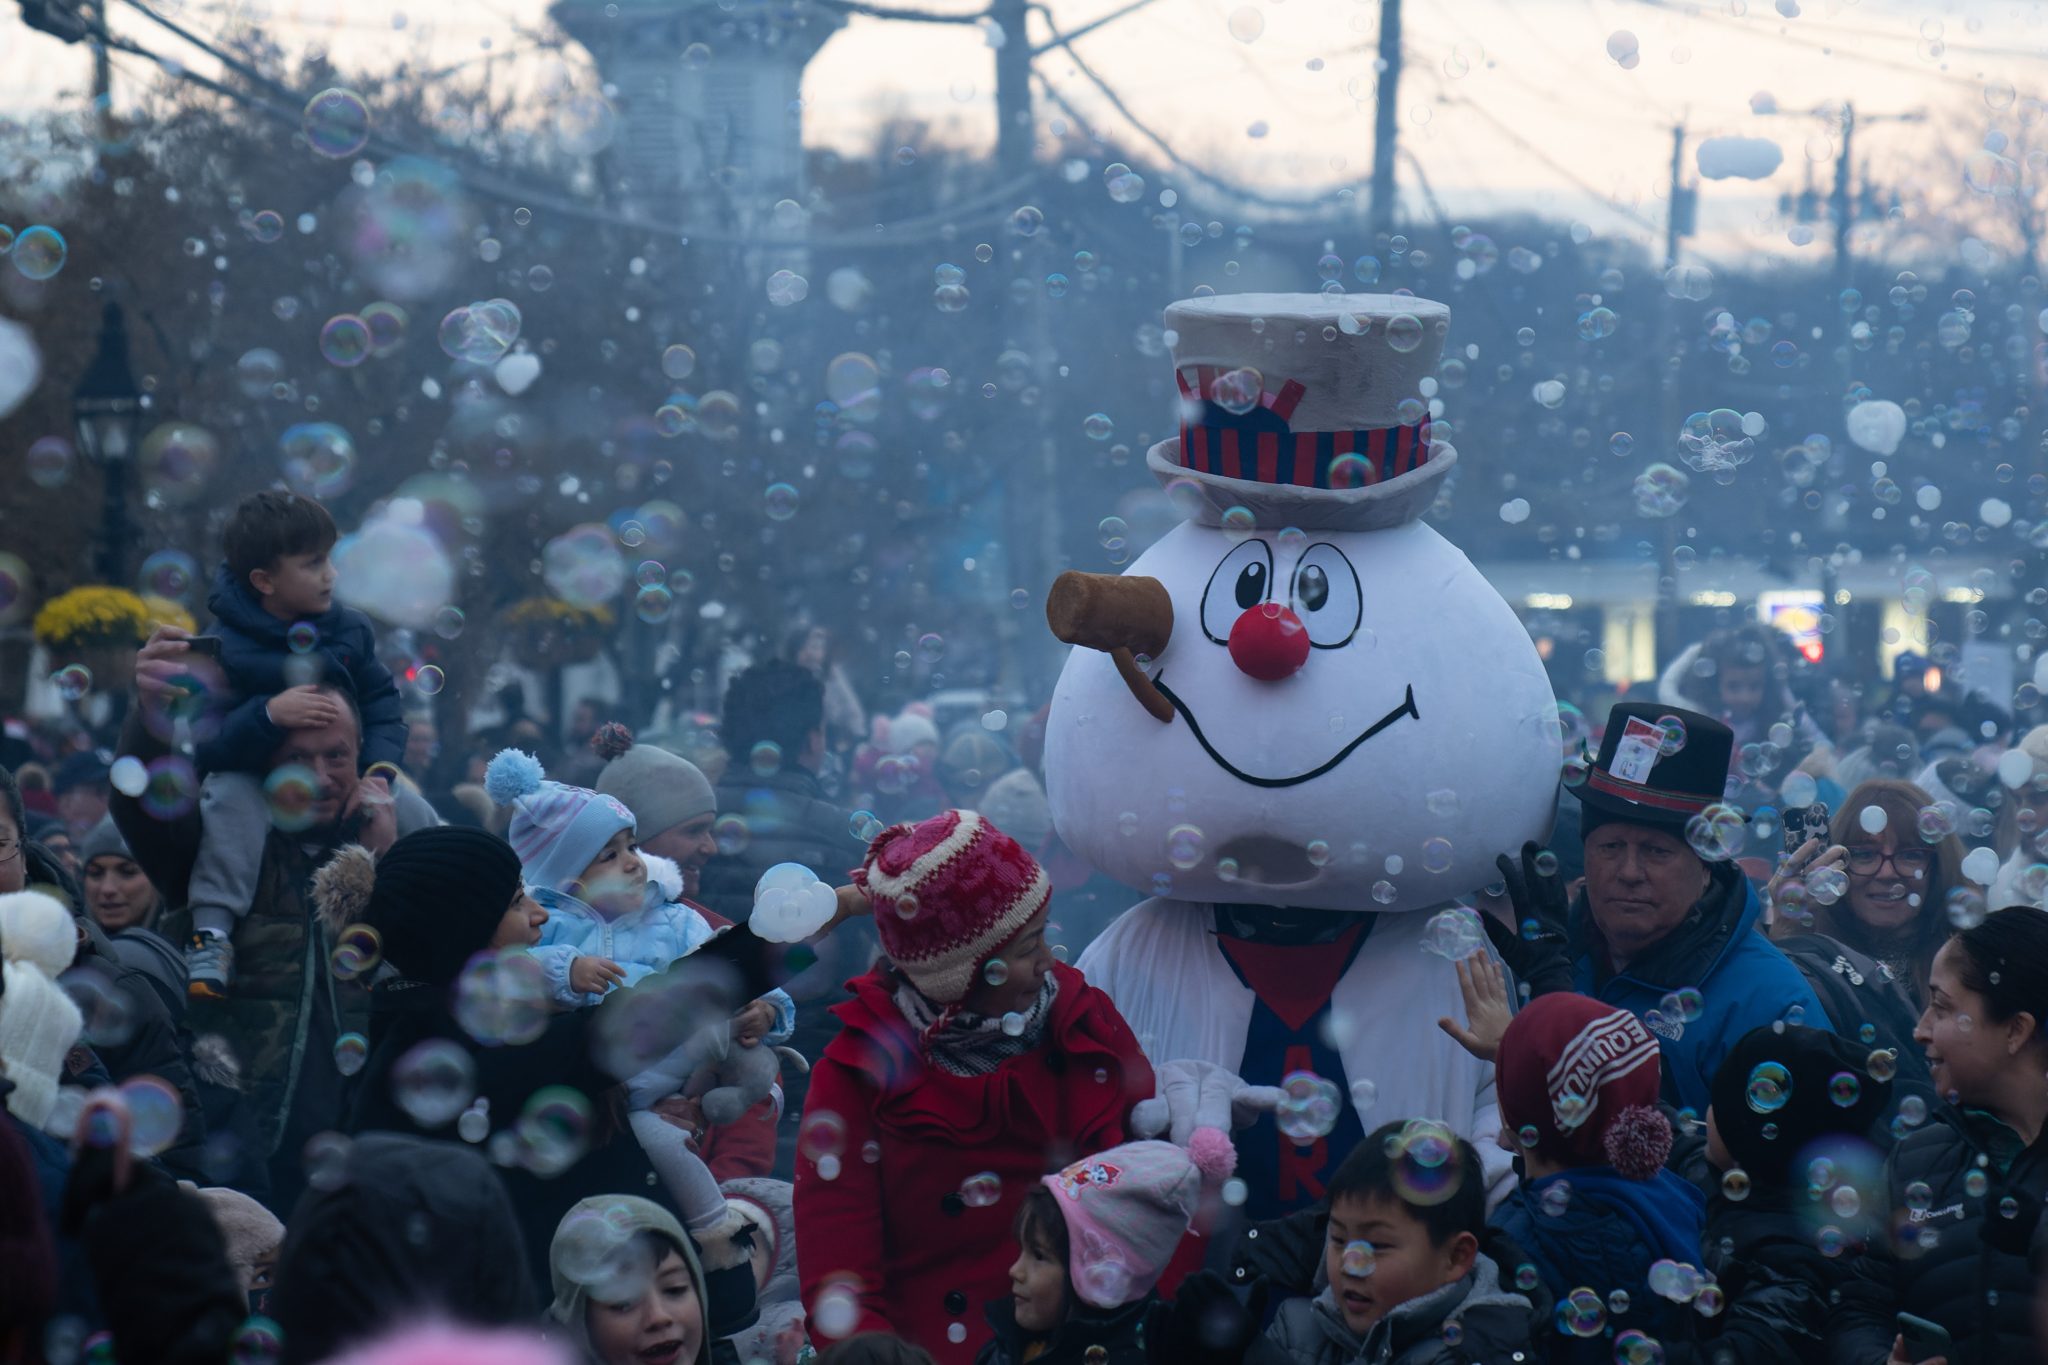 Armonk Celebrates the Return of Frosty the Snowman to Town